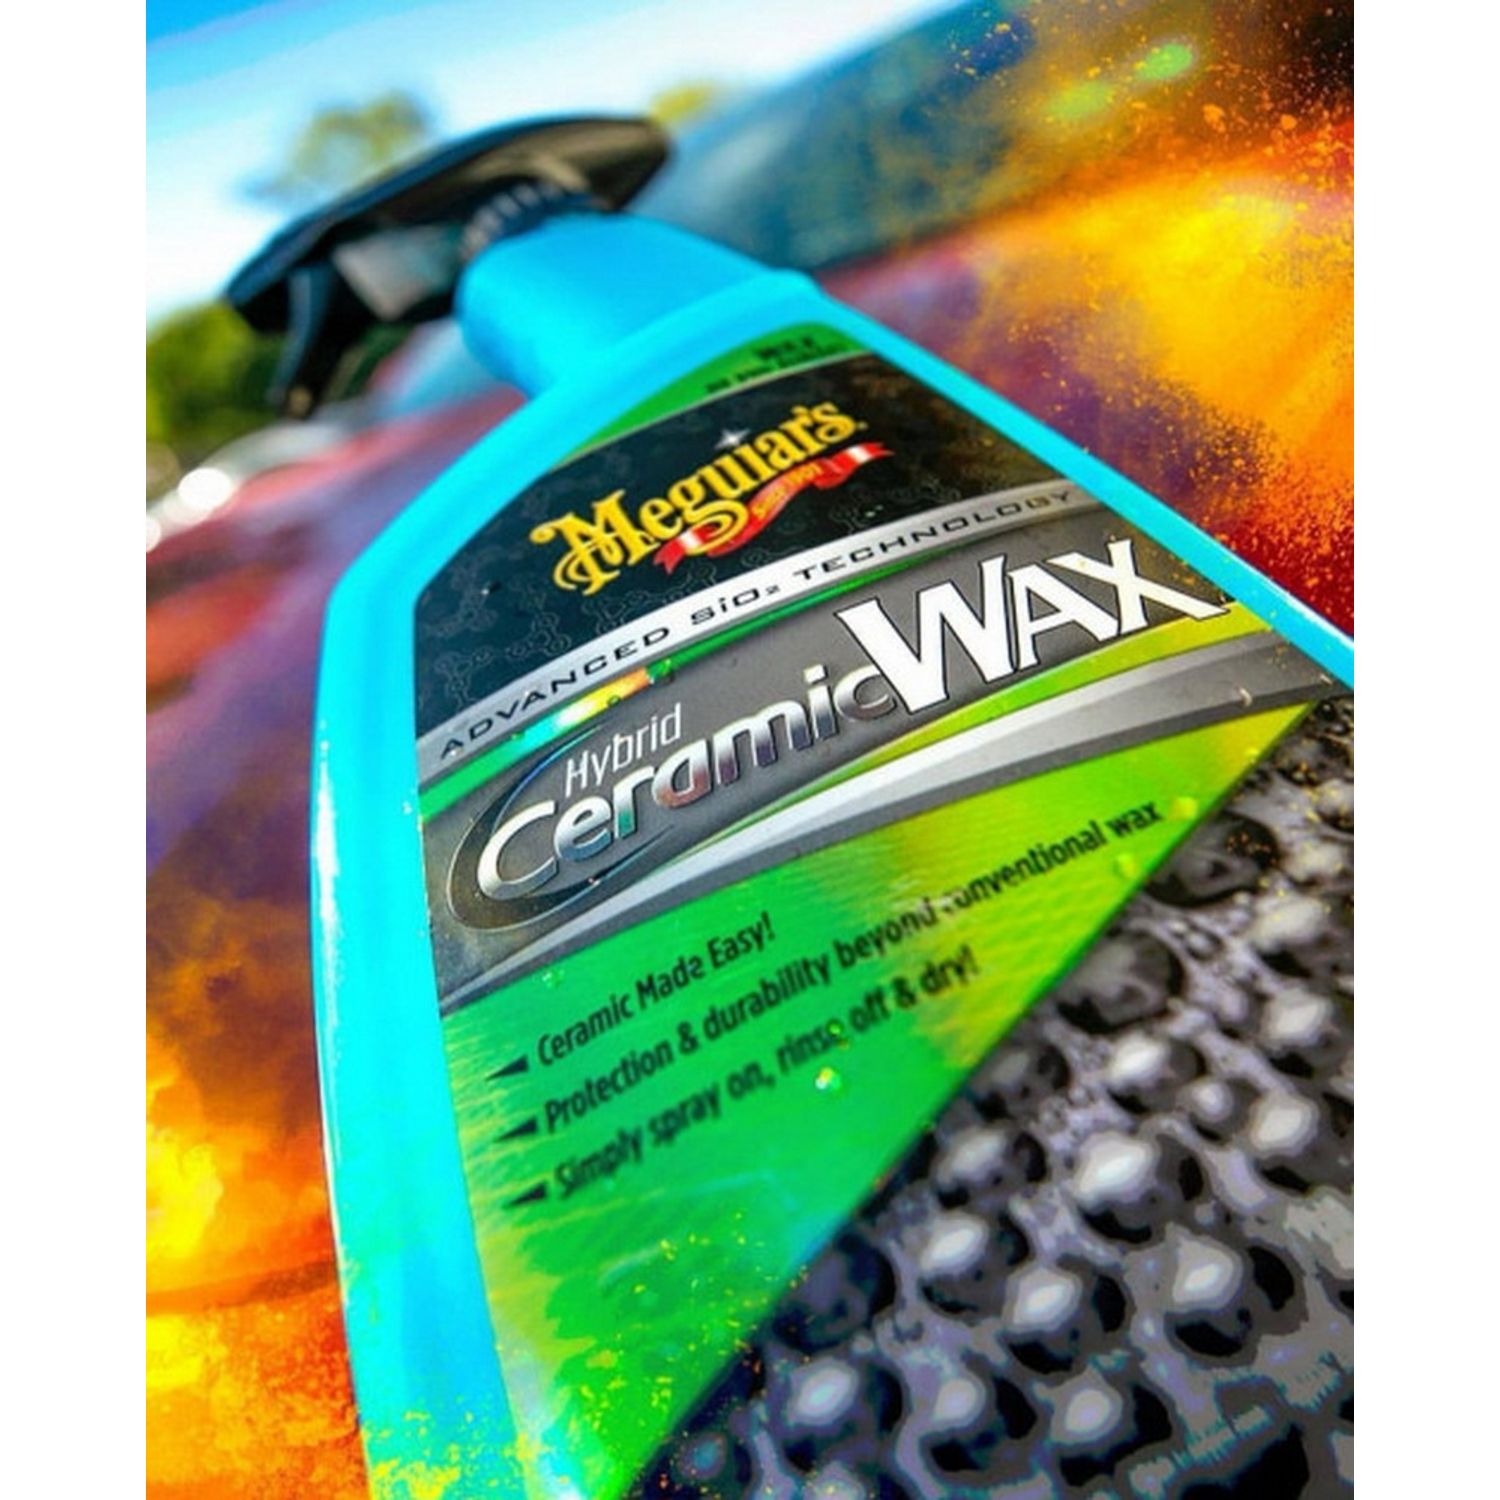 Meguiar's Hybrid Ceramic Wax : Spray & Rinse Protection! NEW